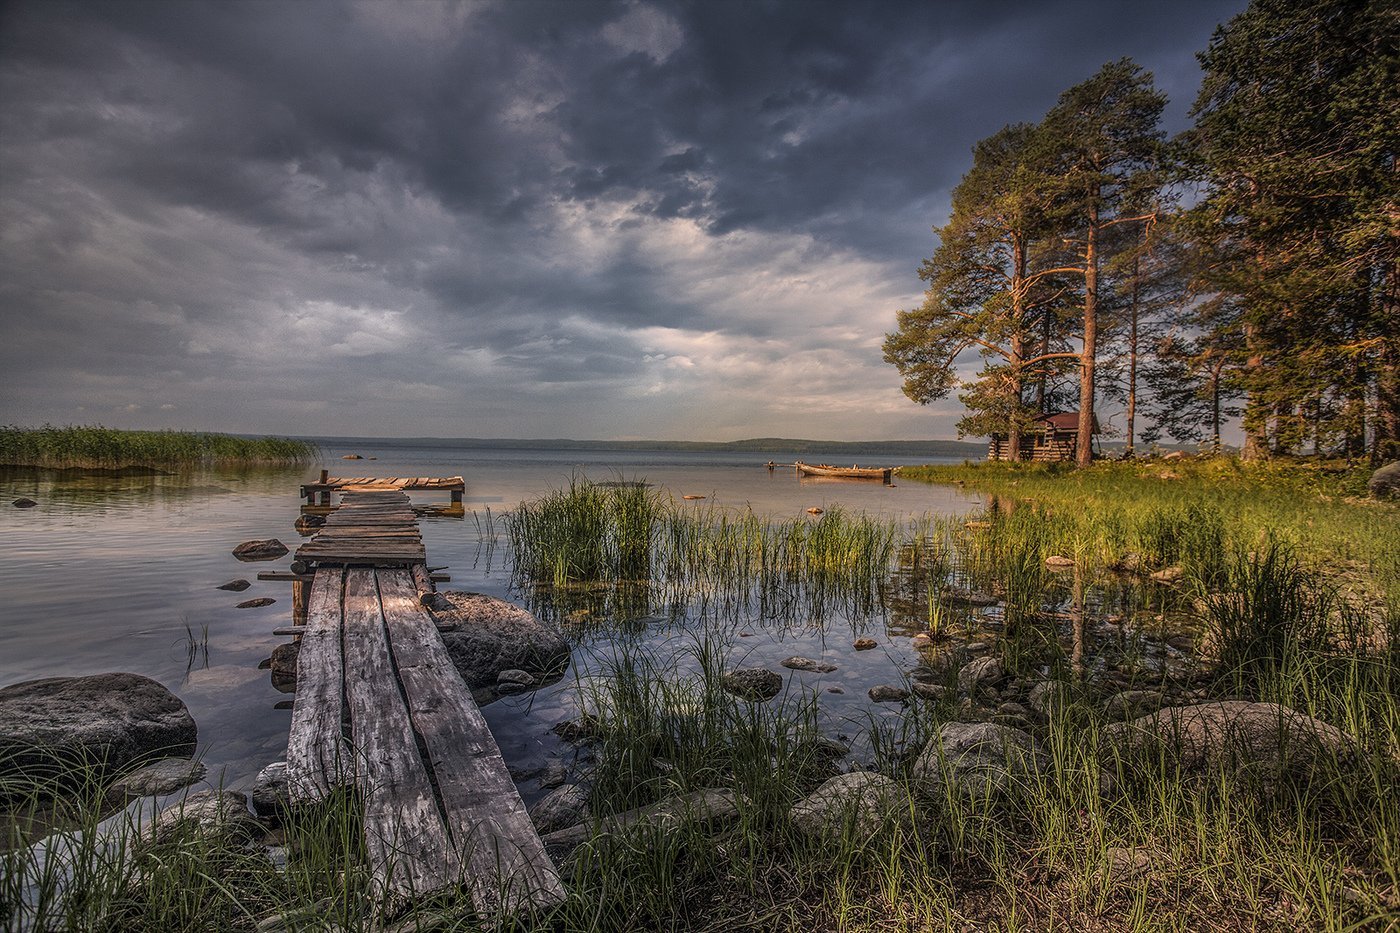 Название онежского озера. Озеро Онега Карелия. Онега Онежское озеро. Природа Карелии Онежское озеро. Онежское озеро Петрозаводск.